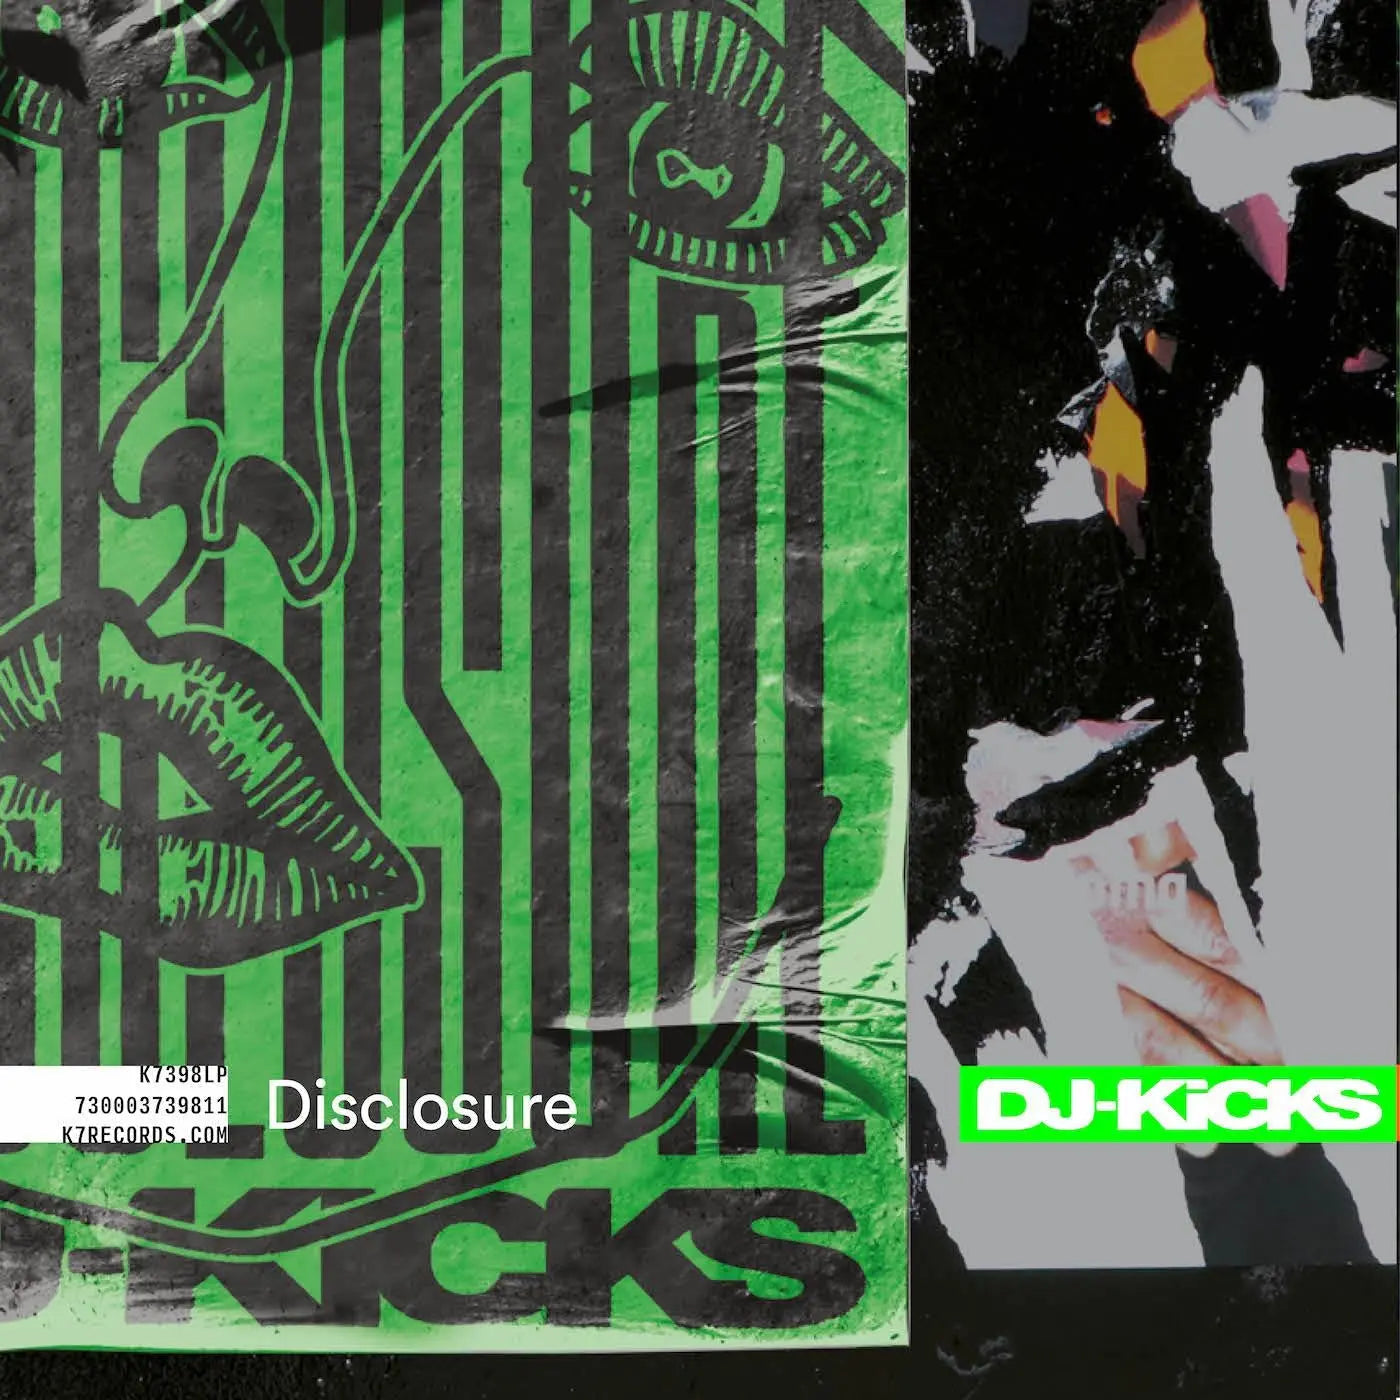 Disclosure - DJ-Kicks [Vinyl 2LP]